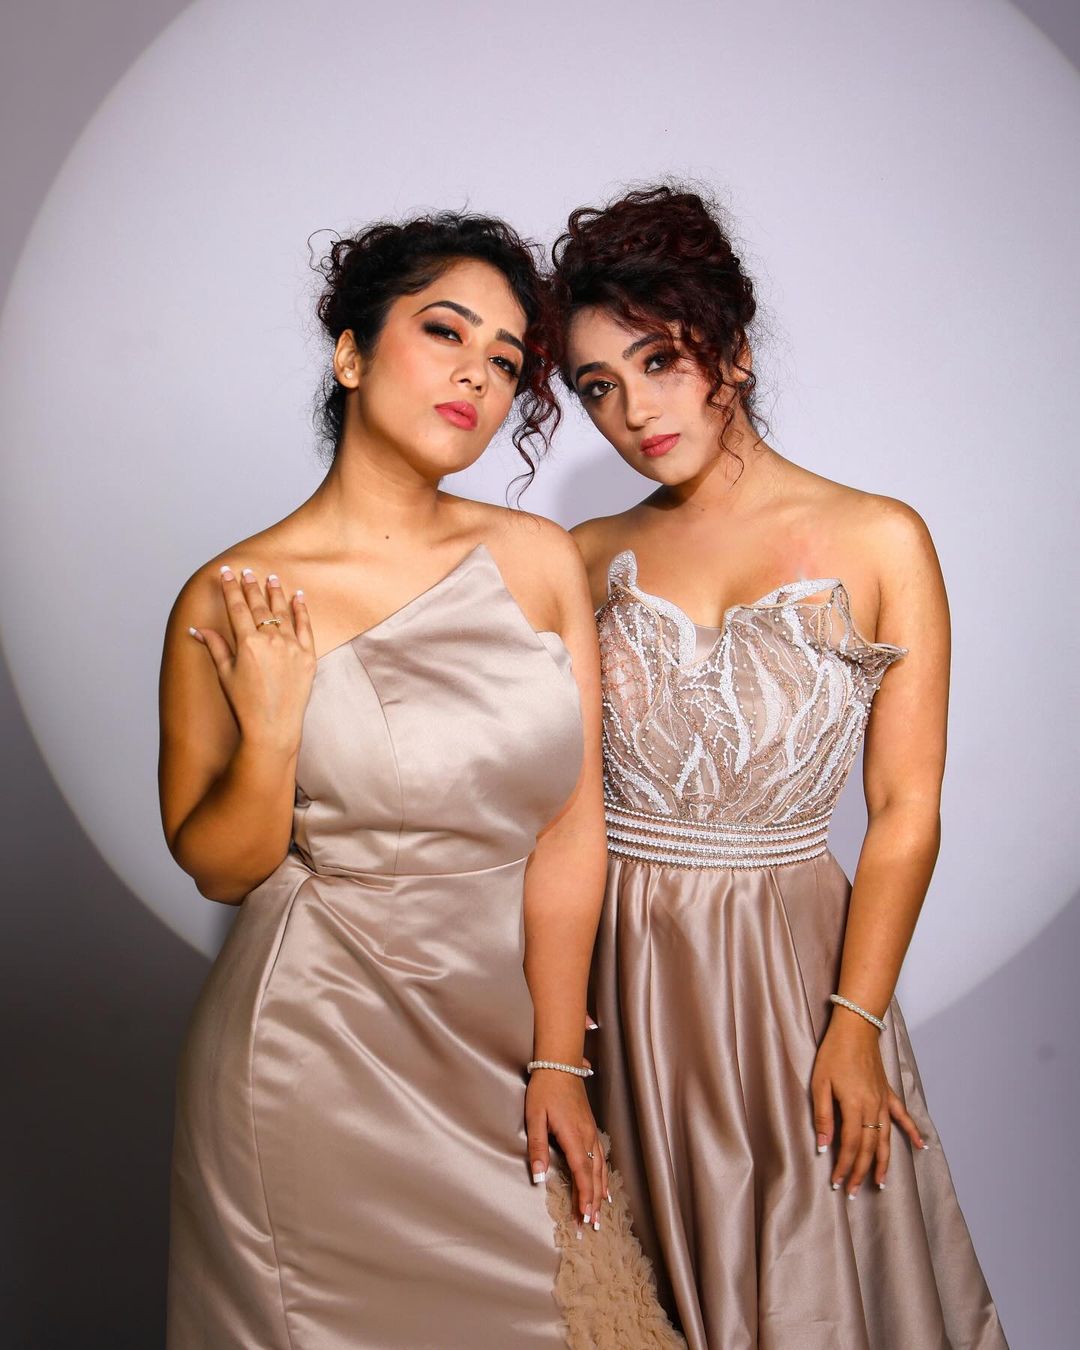 Sibling-duo Surabhi and Samriddhi Twin in Off-Shoulder Silk Gown